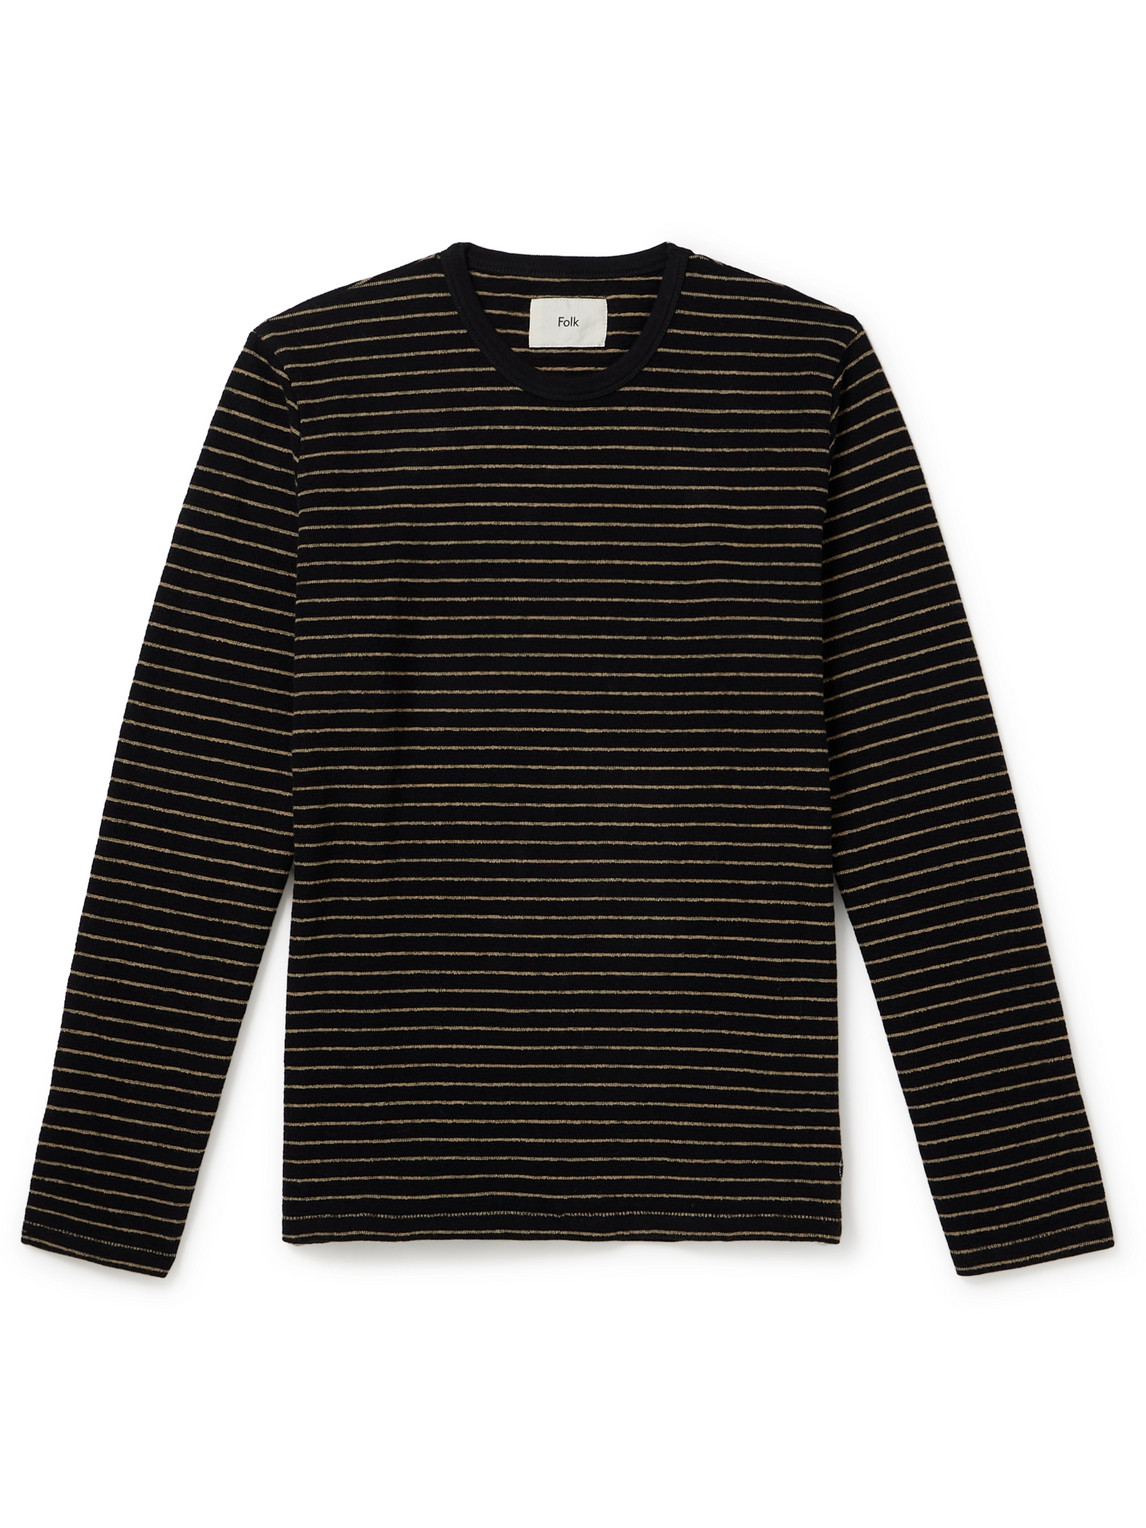 Folk Striped Cotton T-shirt In Black